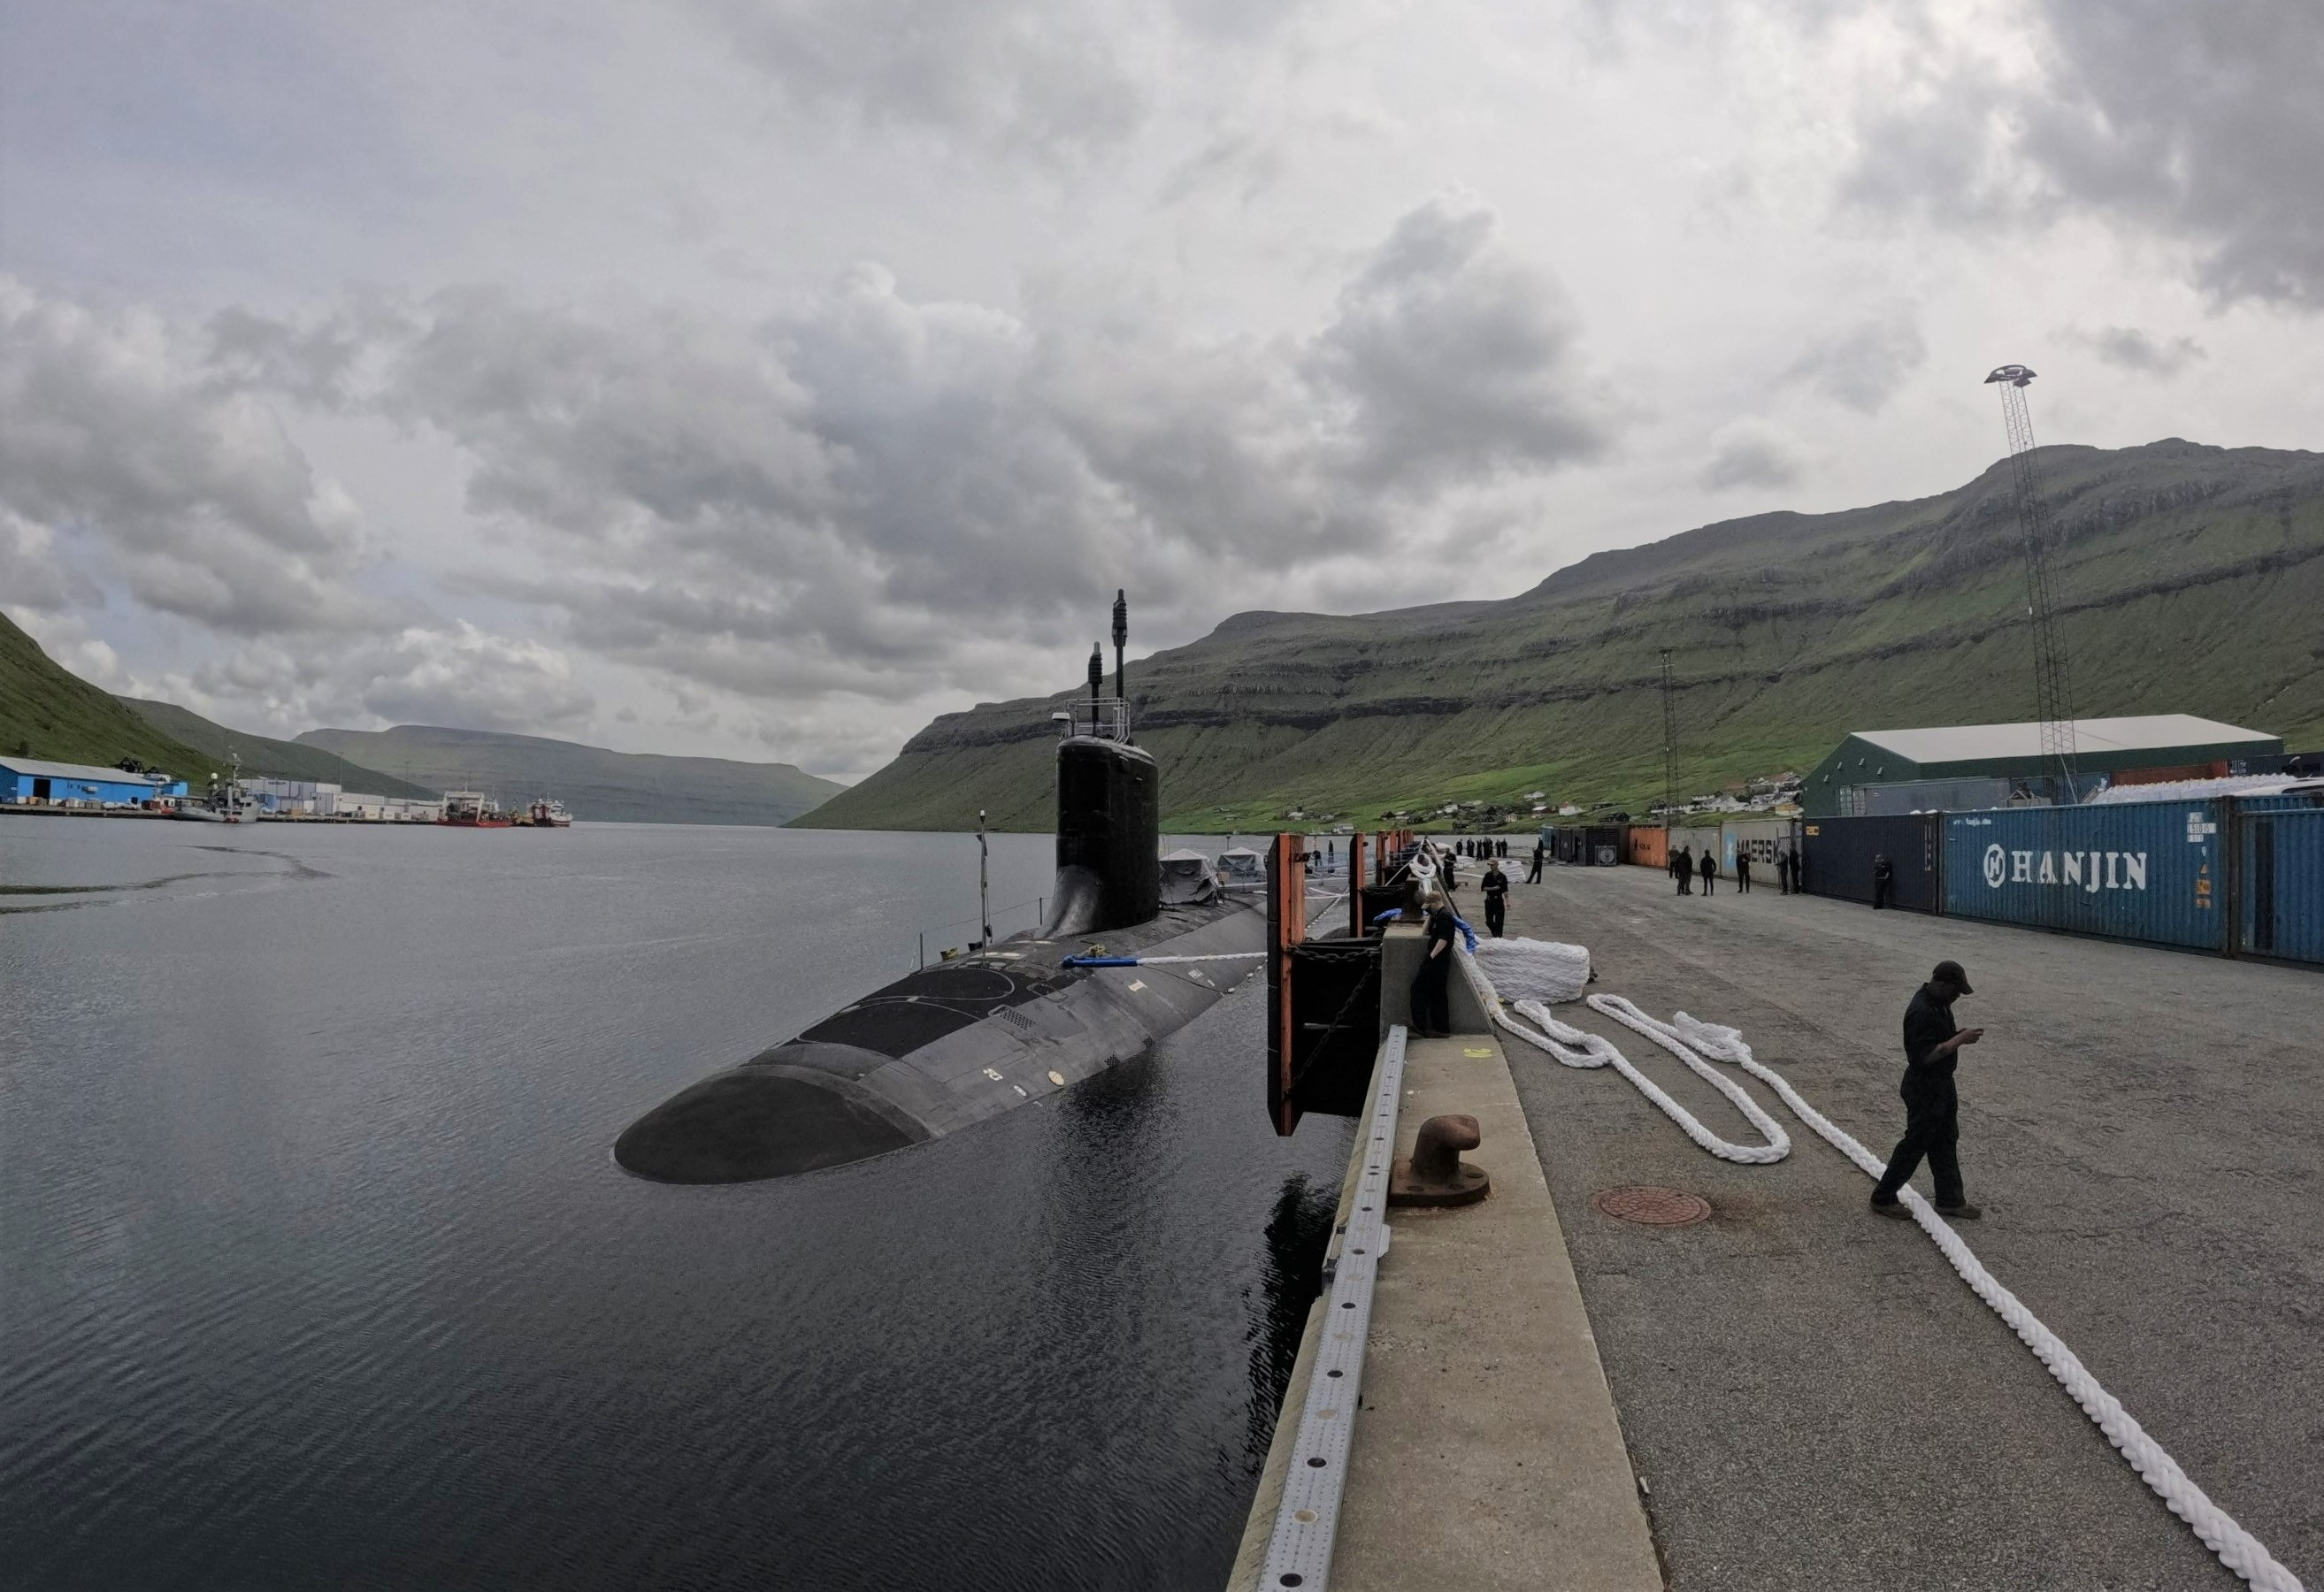 sub visits Faroe Islands amid Russia